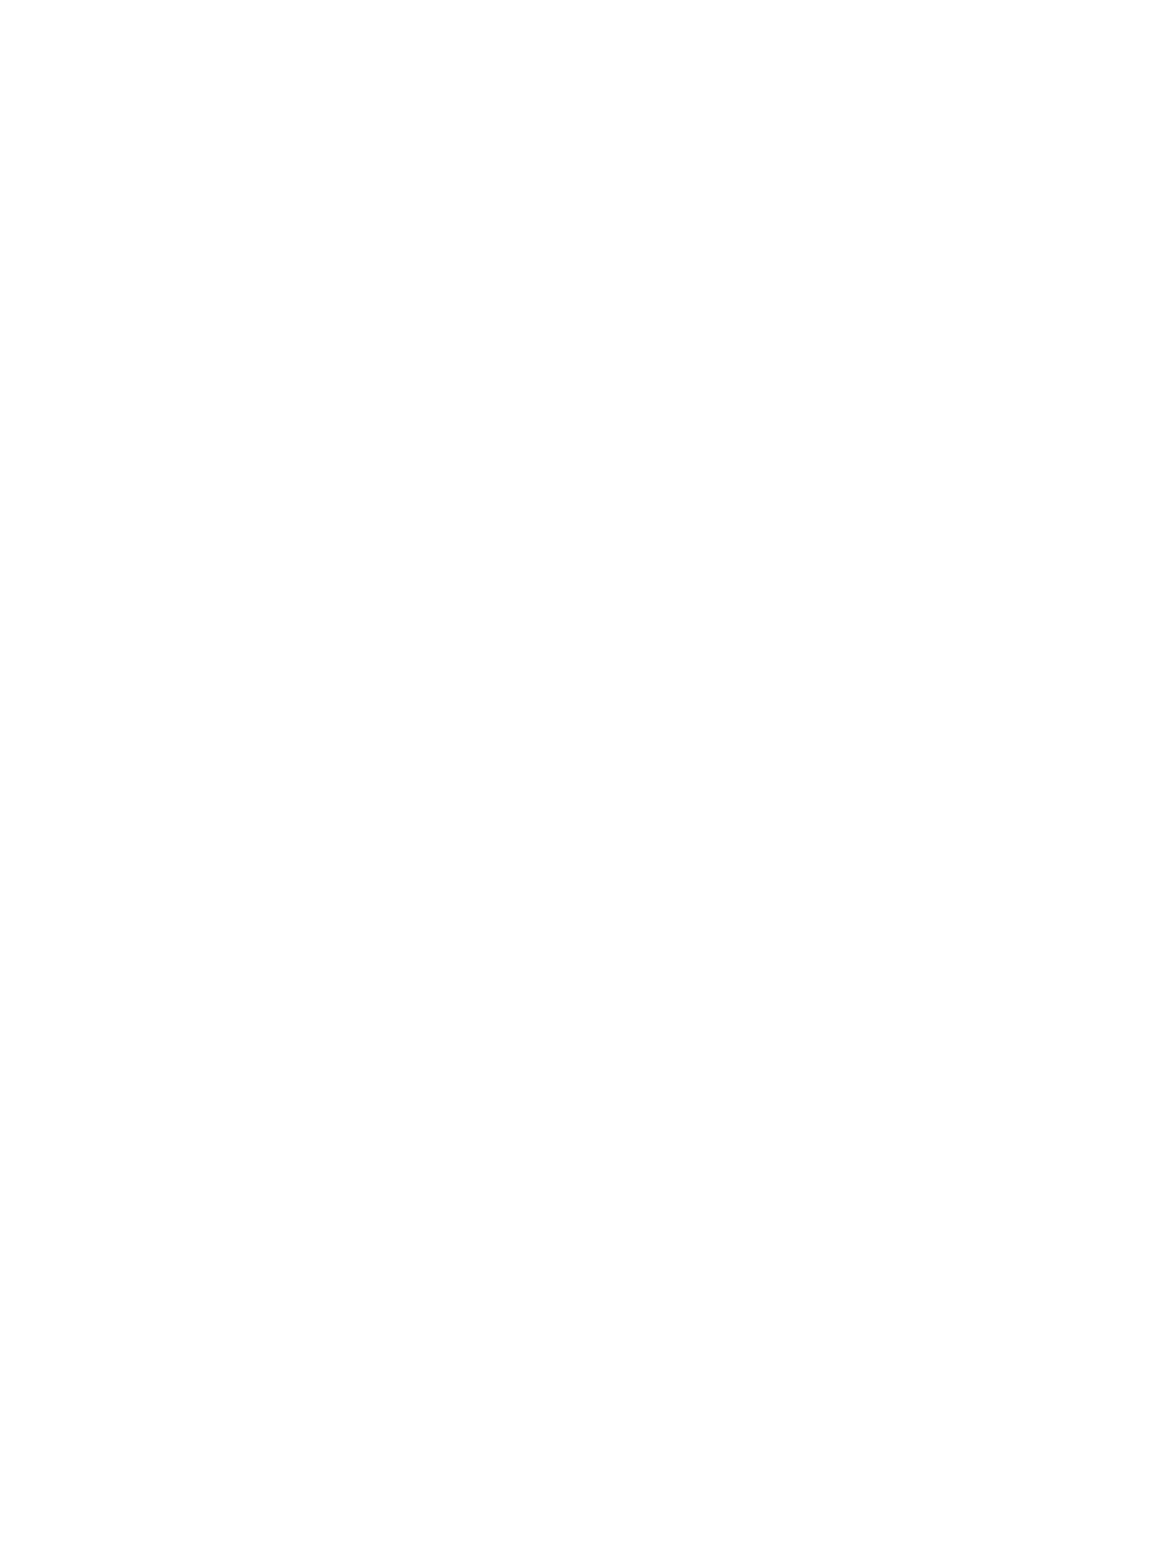 New York Times logo pour fonds sombres (PNG transparent)